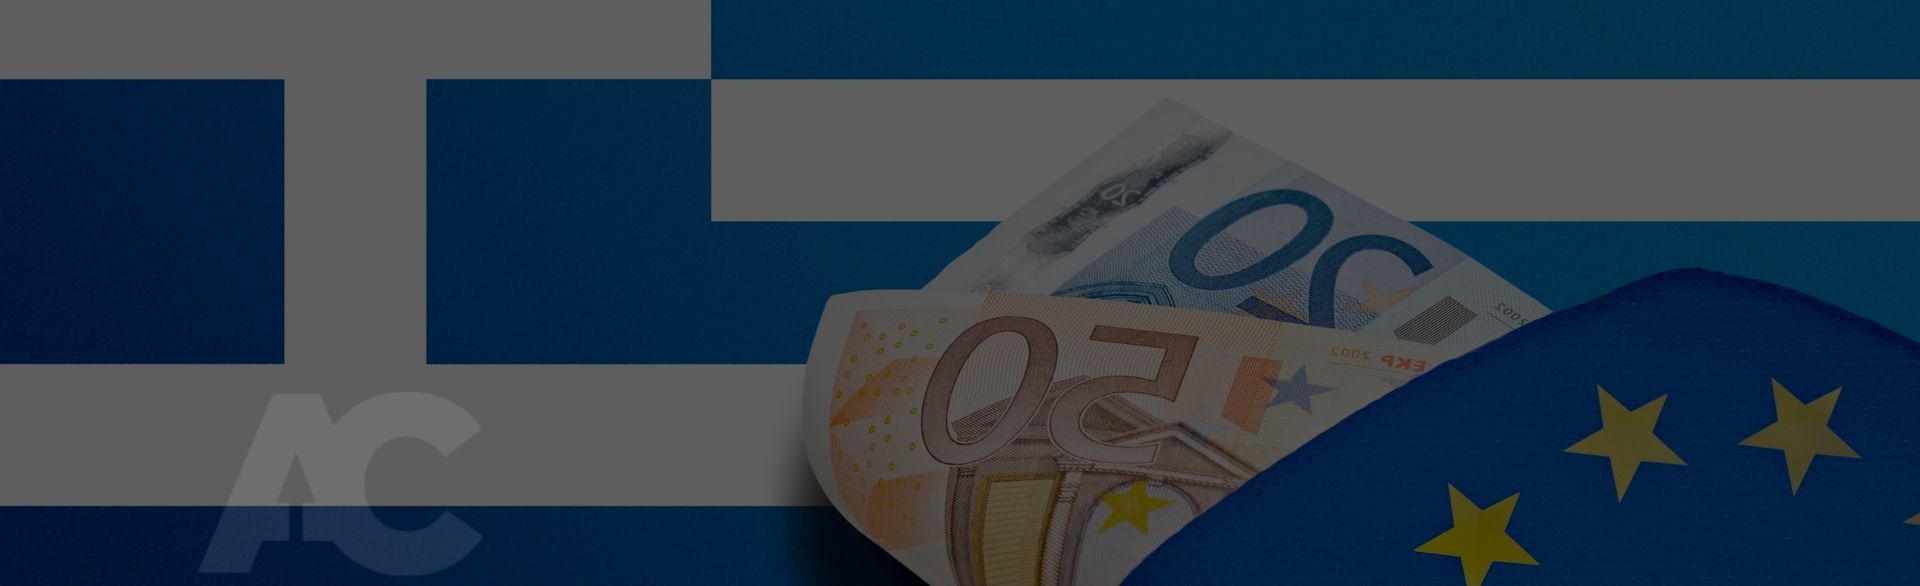 acbusiness-greek-investment-law-bg